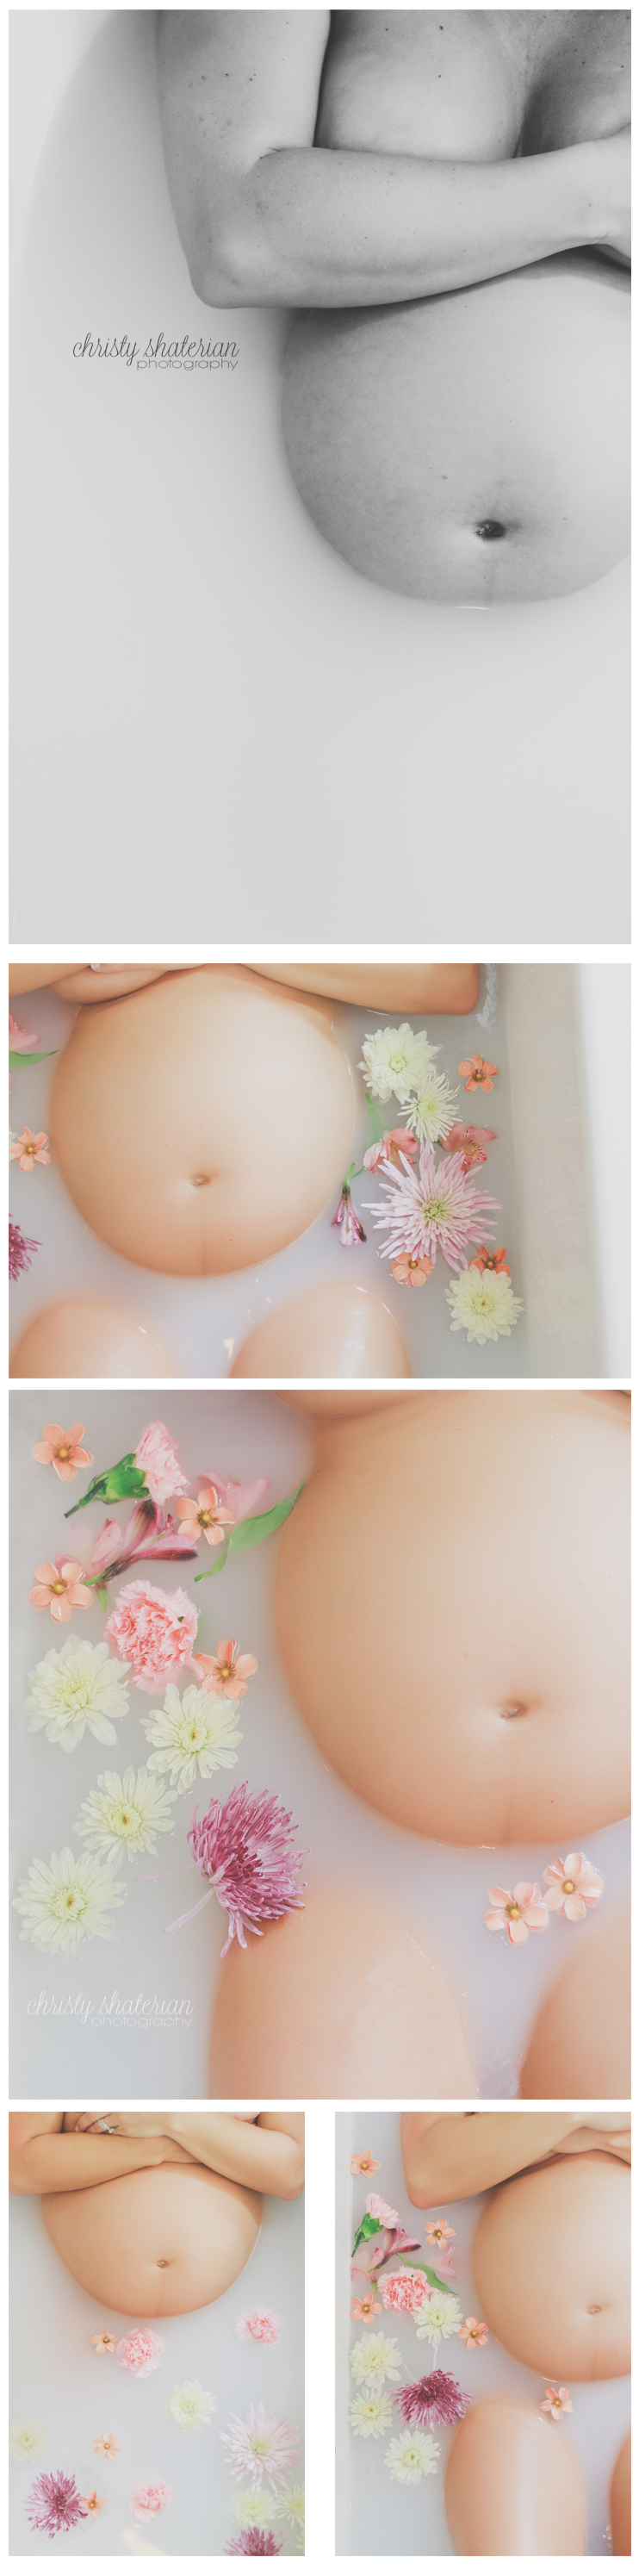 CSP_Maternity_Milk Bath